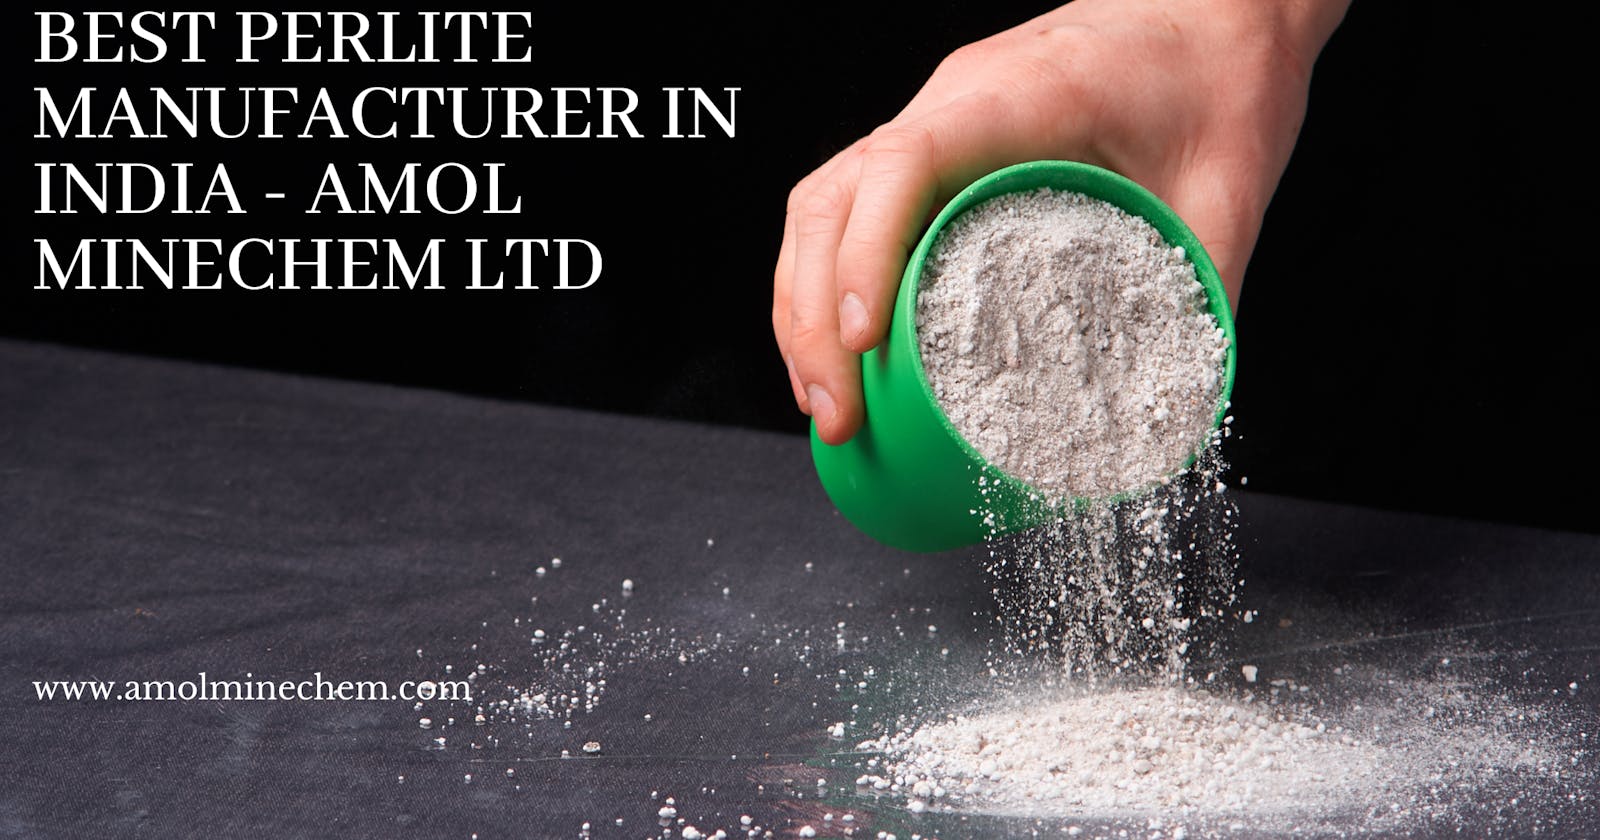 Best Perlite Manufacturer in India - Amol Minechem Ltd